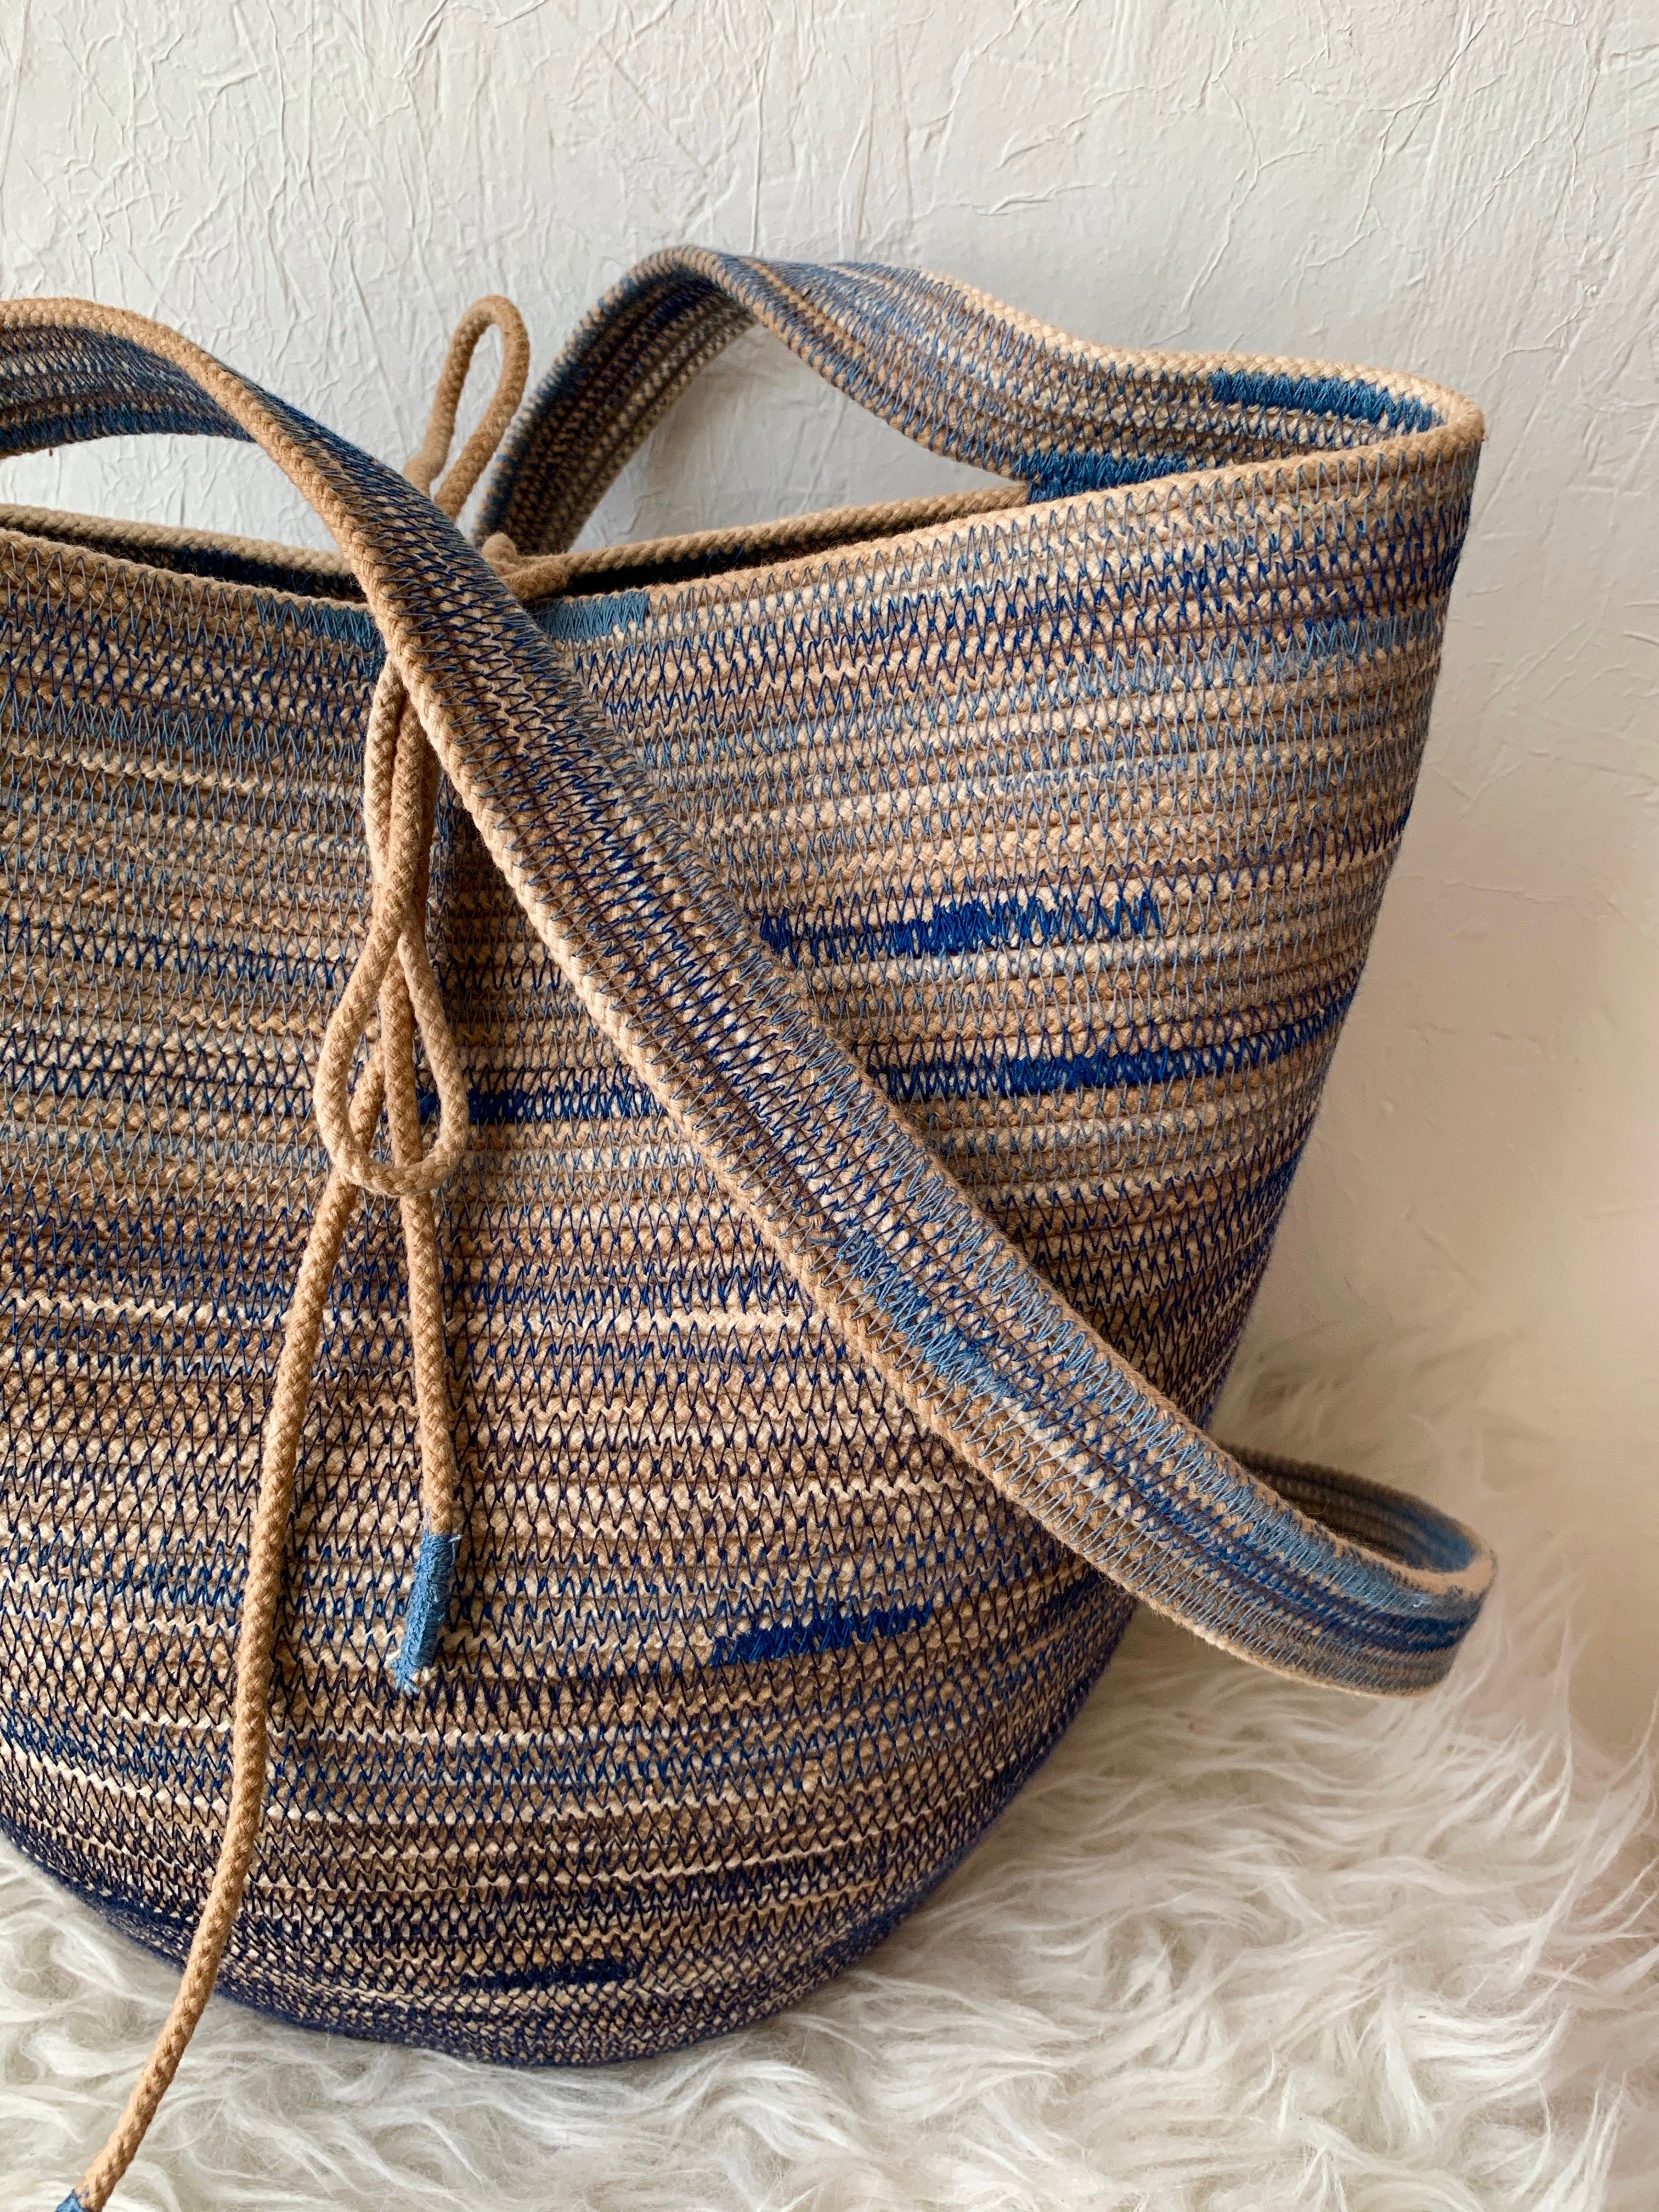 naturally dyed handmade rope basket